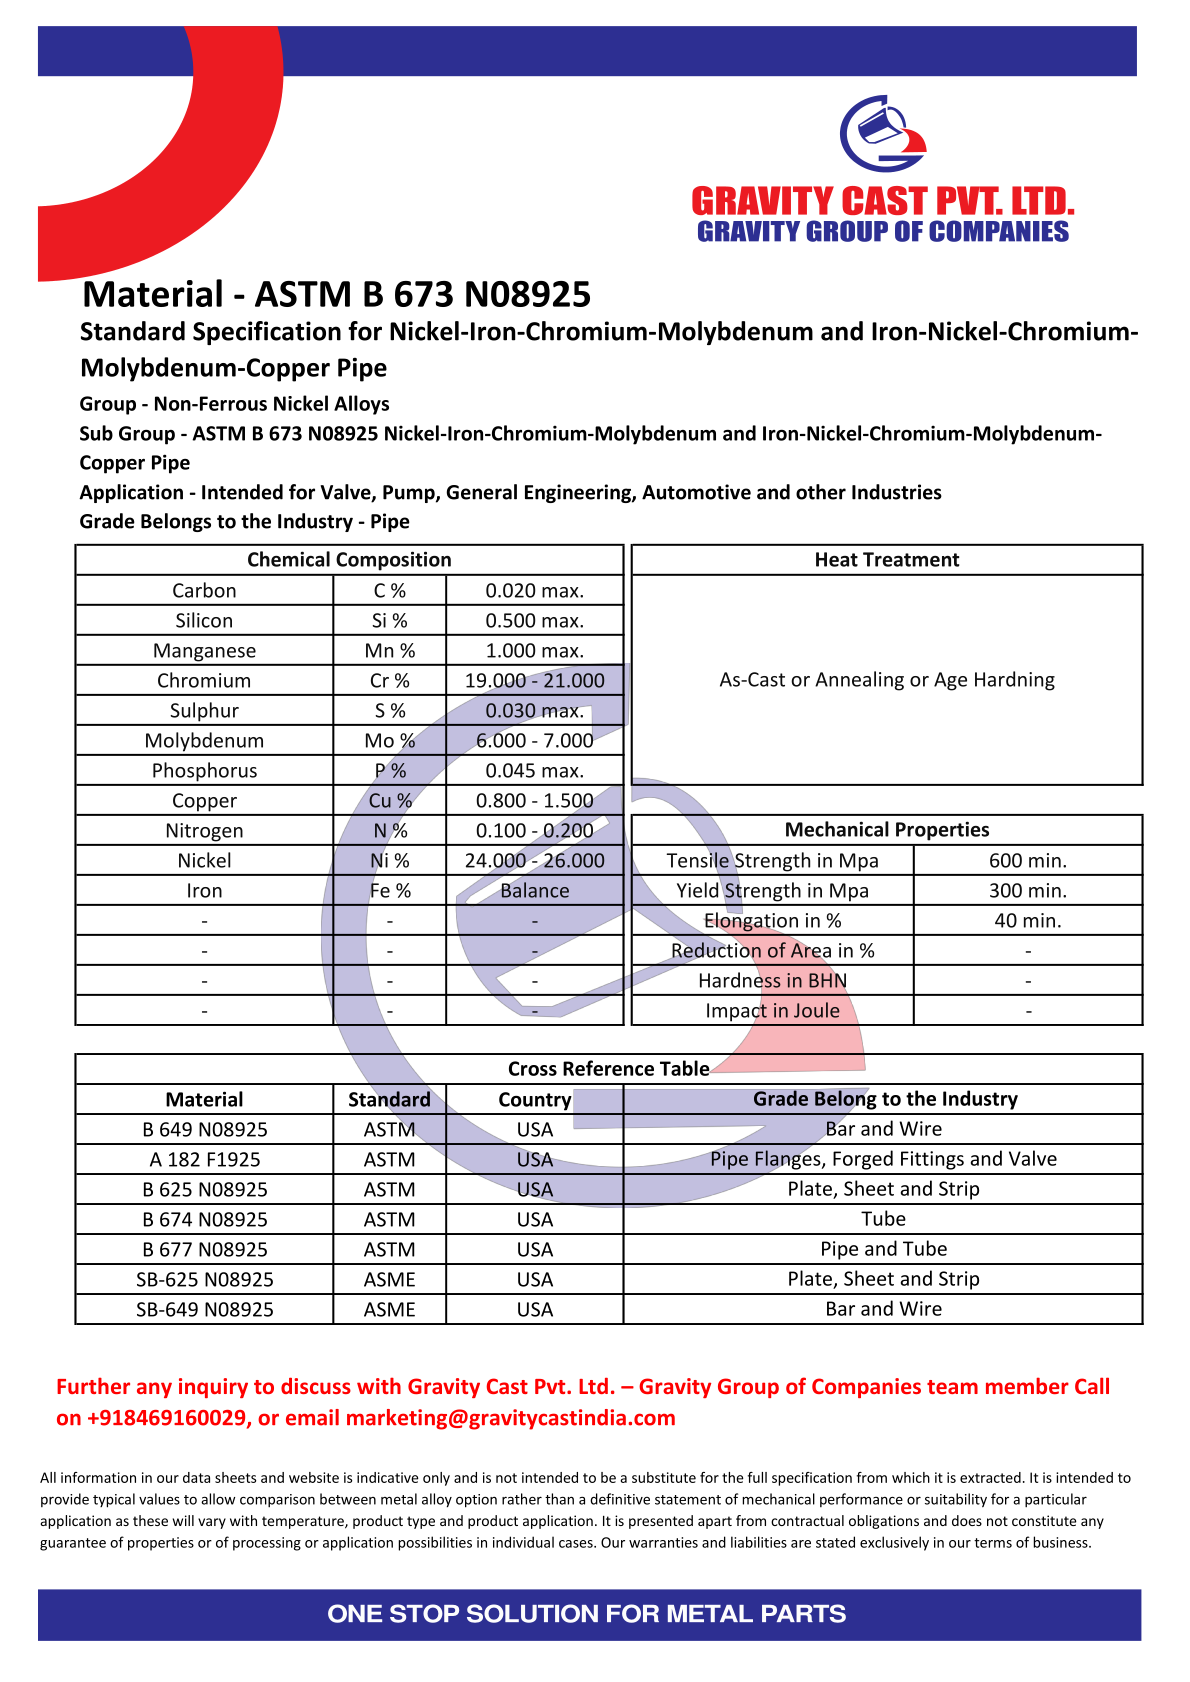 ASTM B 673 N08925.pdf